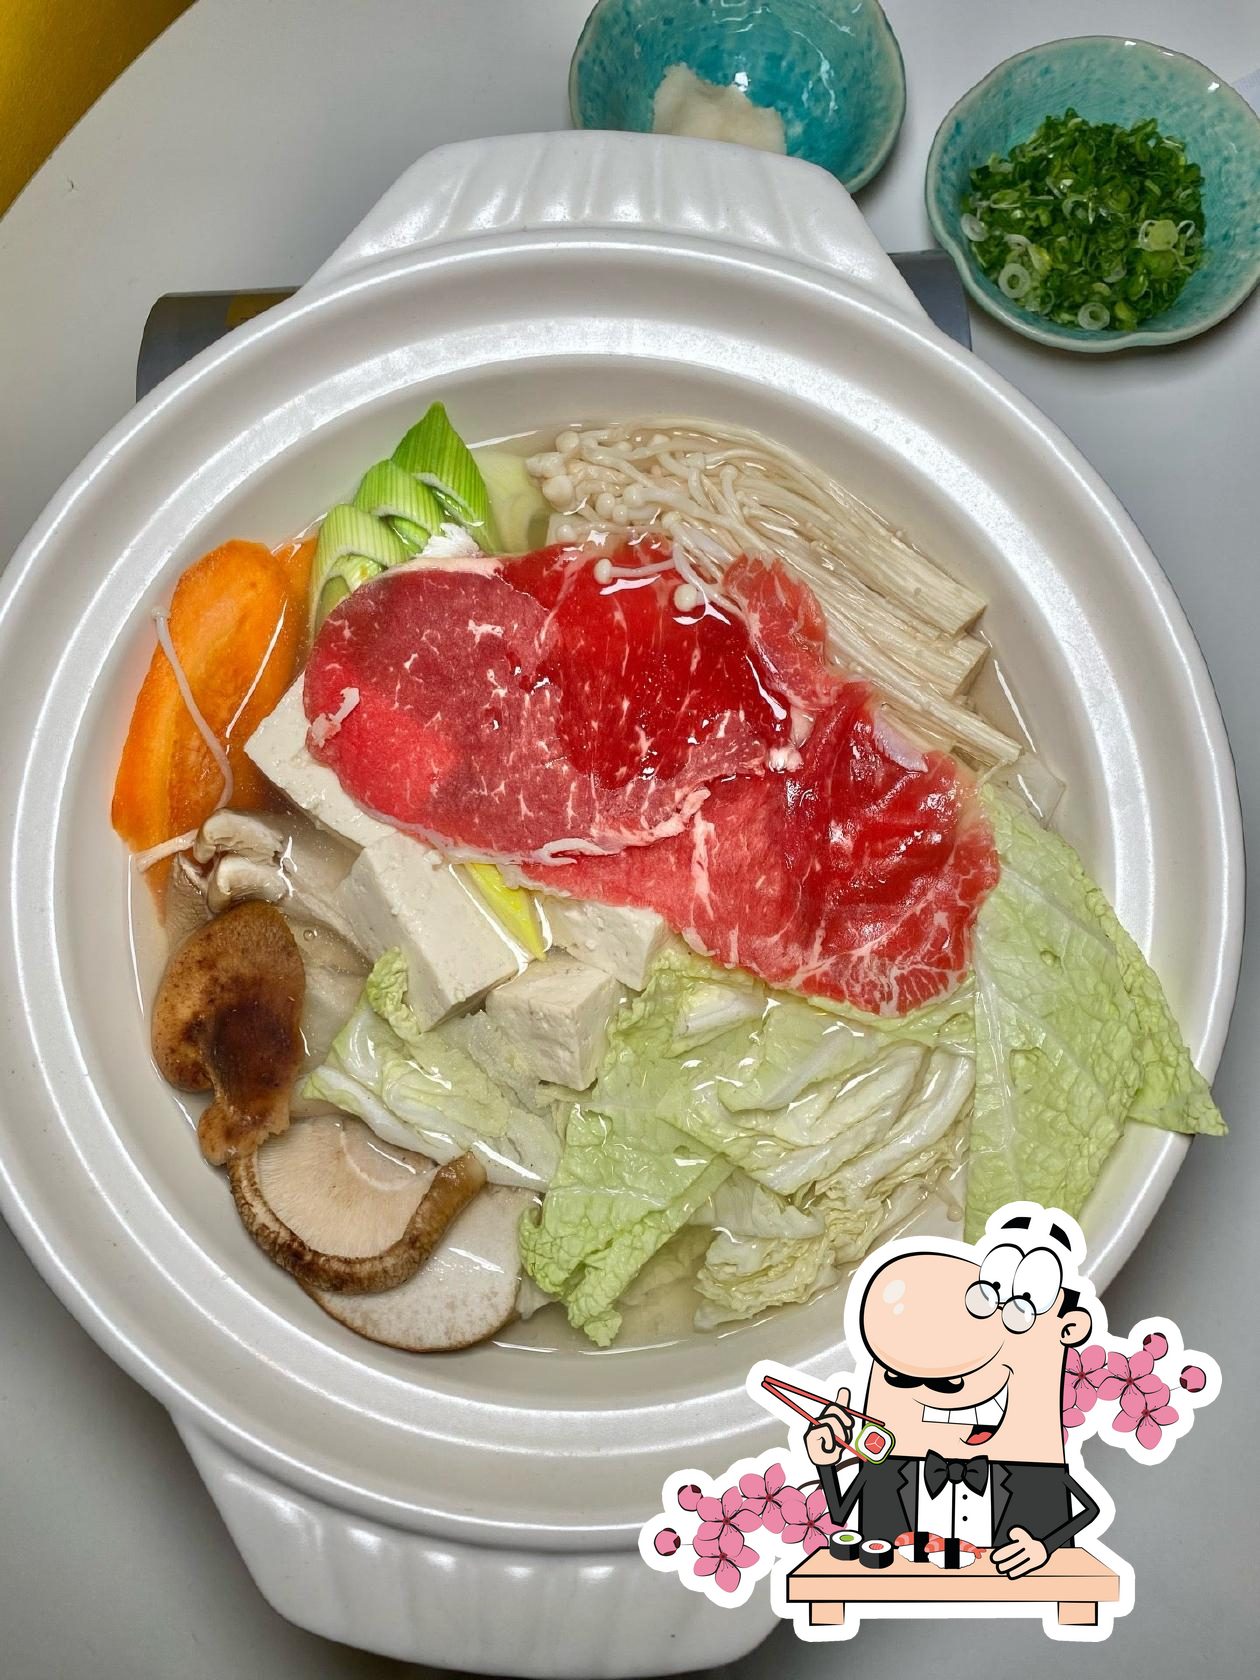 https://img.restaurantguru.com/r722-MakiMaki-Sushi-dishes.jpg